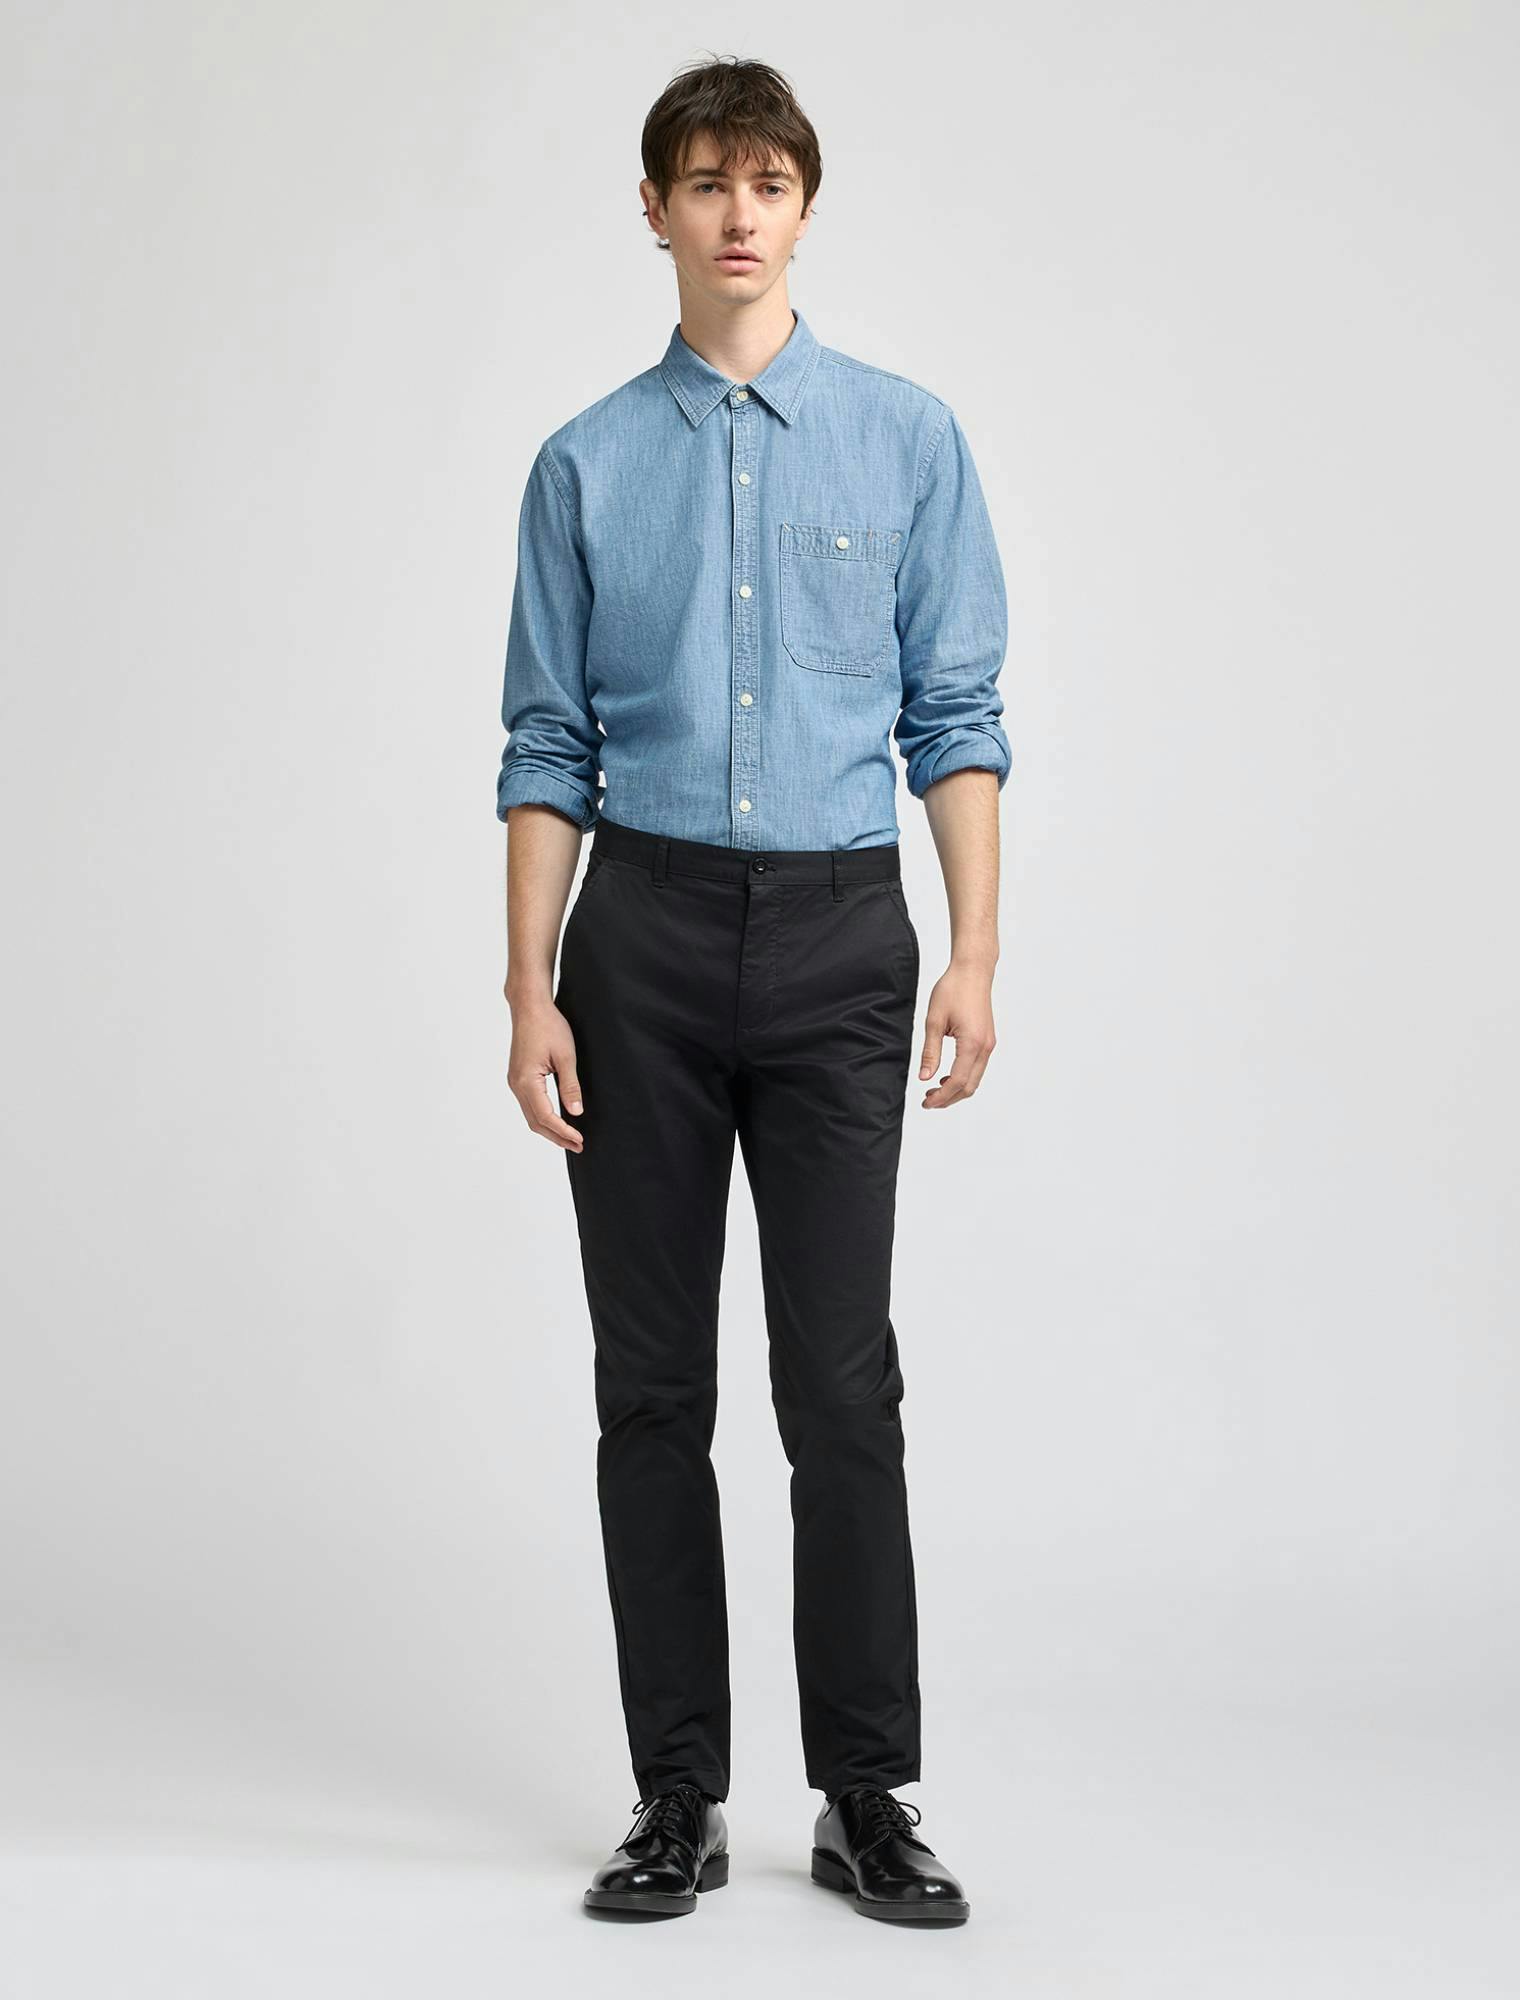 Men's Long Sleeve Chambray Shirt - Denim Blue